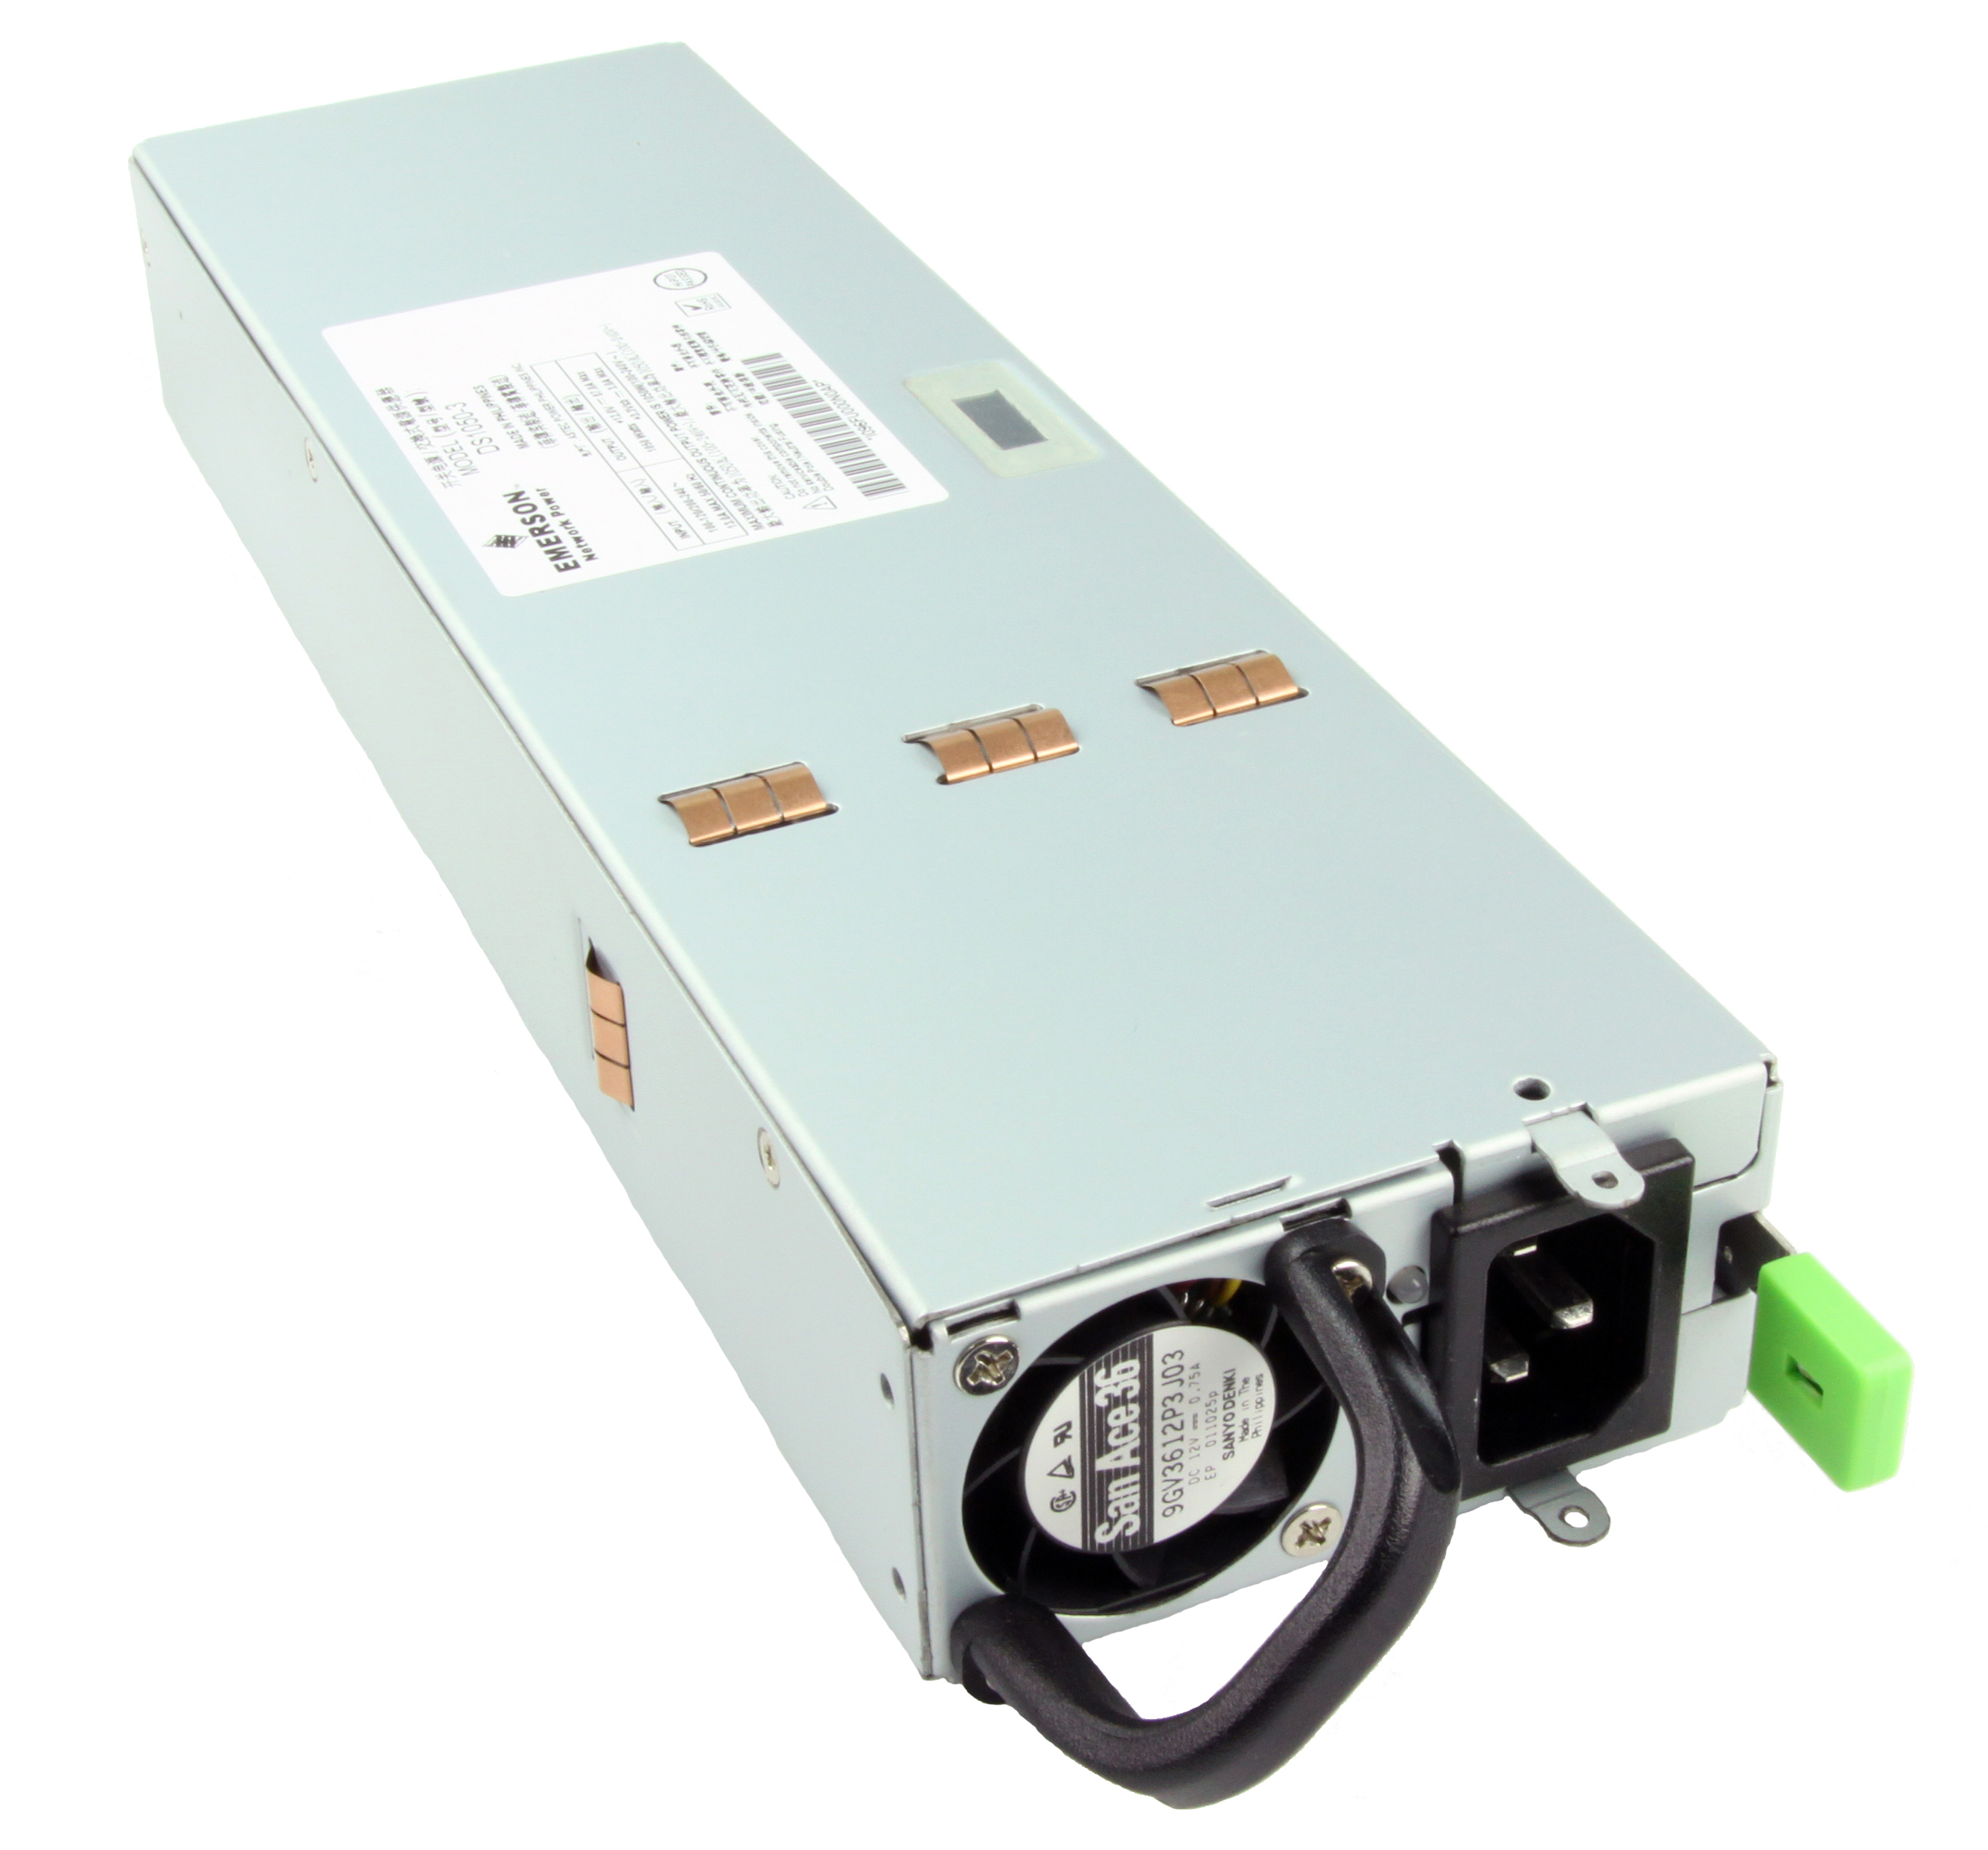 Emerson Network Power Adds DS1050-3 1050 Watt Model to Line of Gold Standard Efficiency Bulk Front End AC-DC Power Supplies